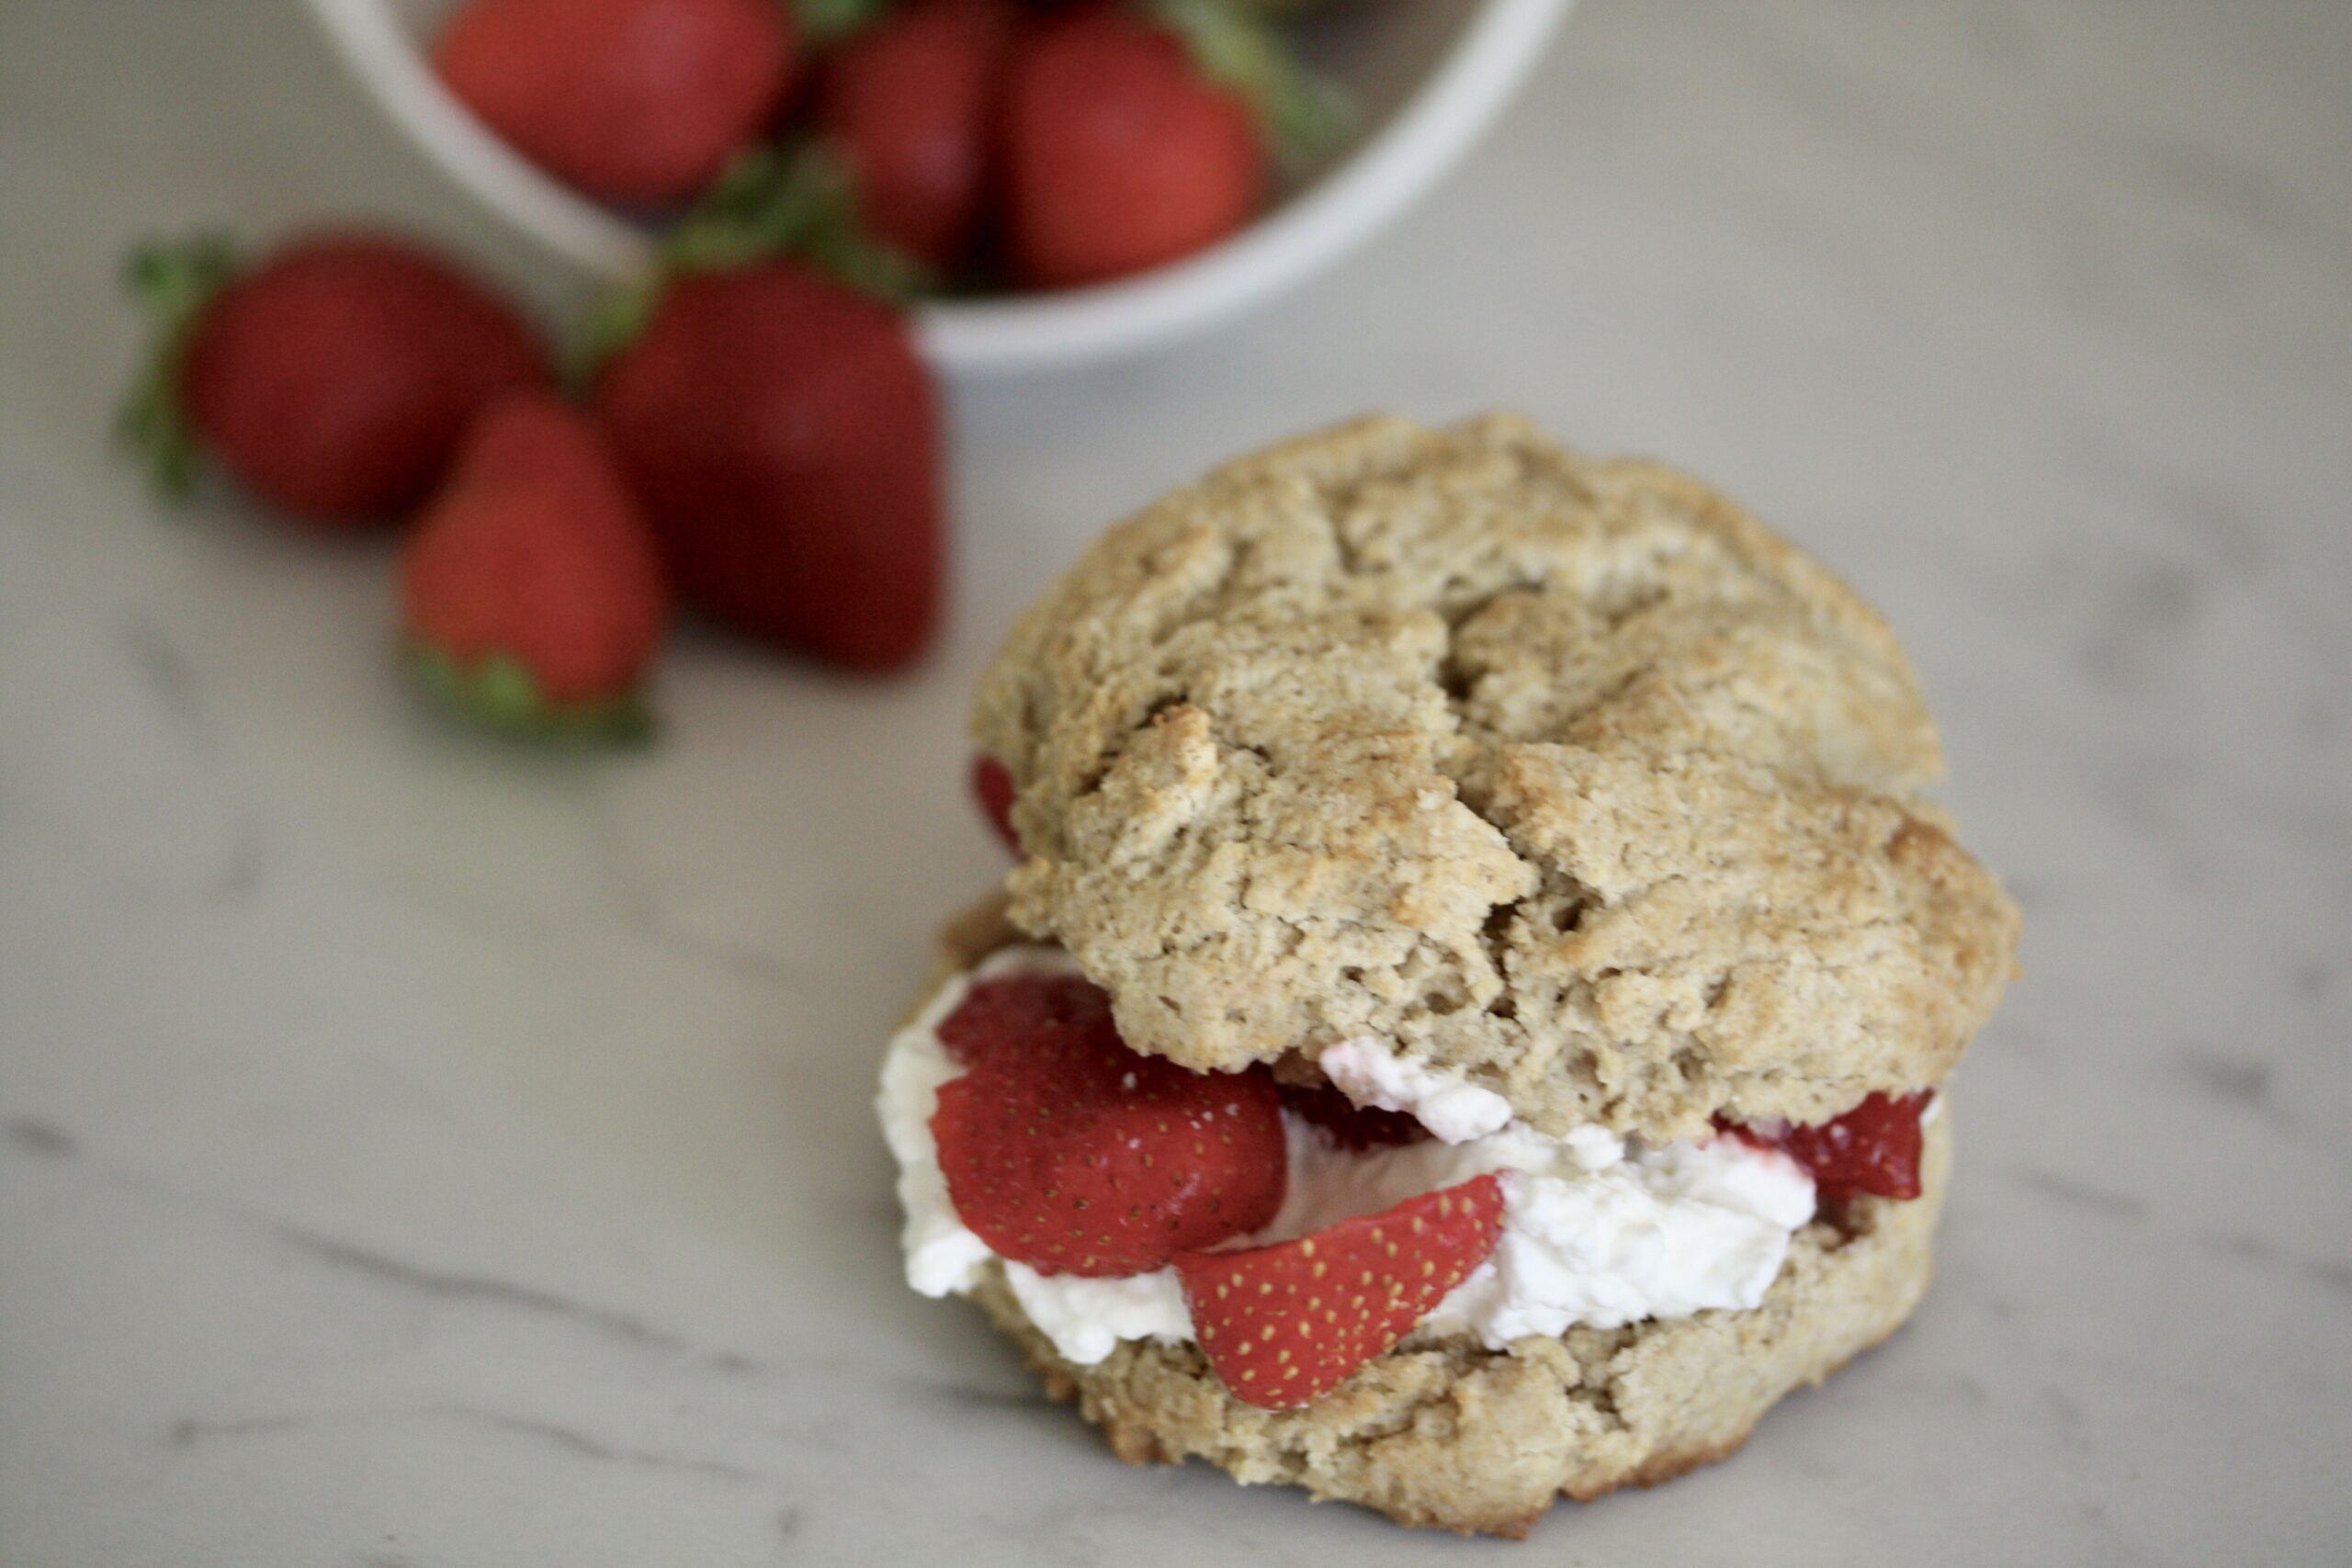 Gluten-free strawberry shortcake and strawberries